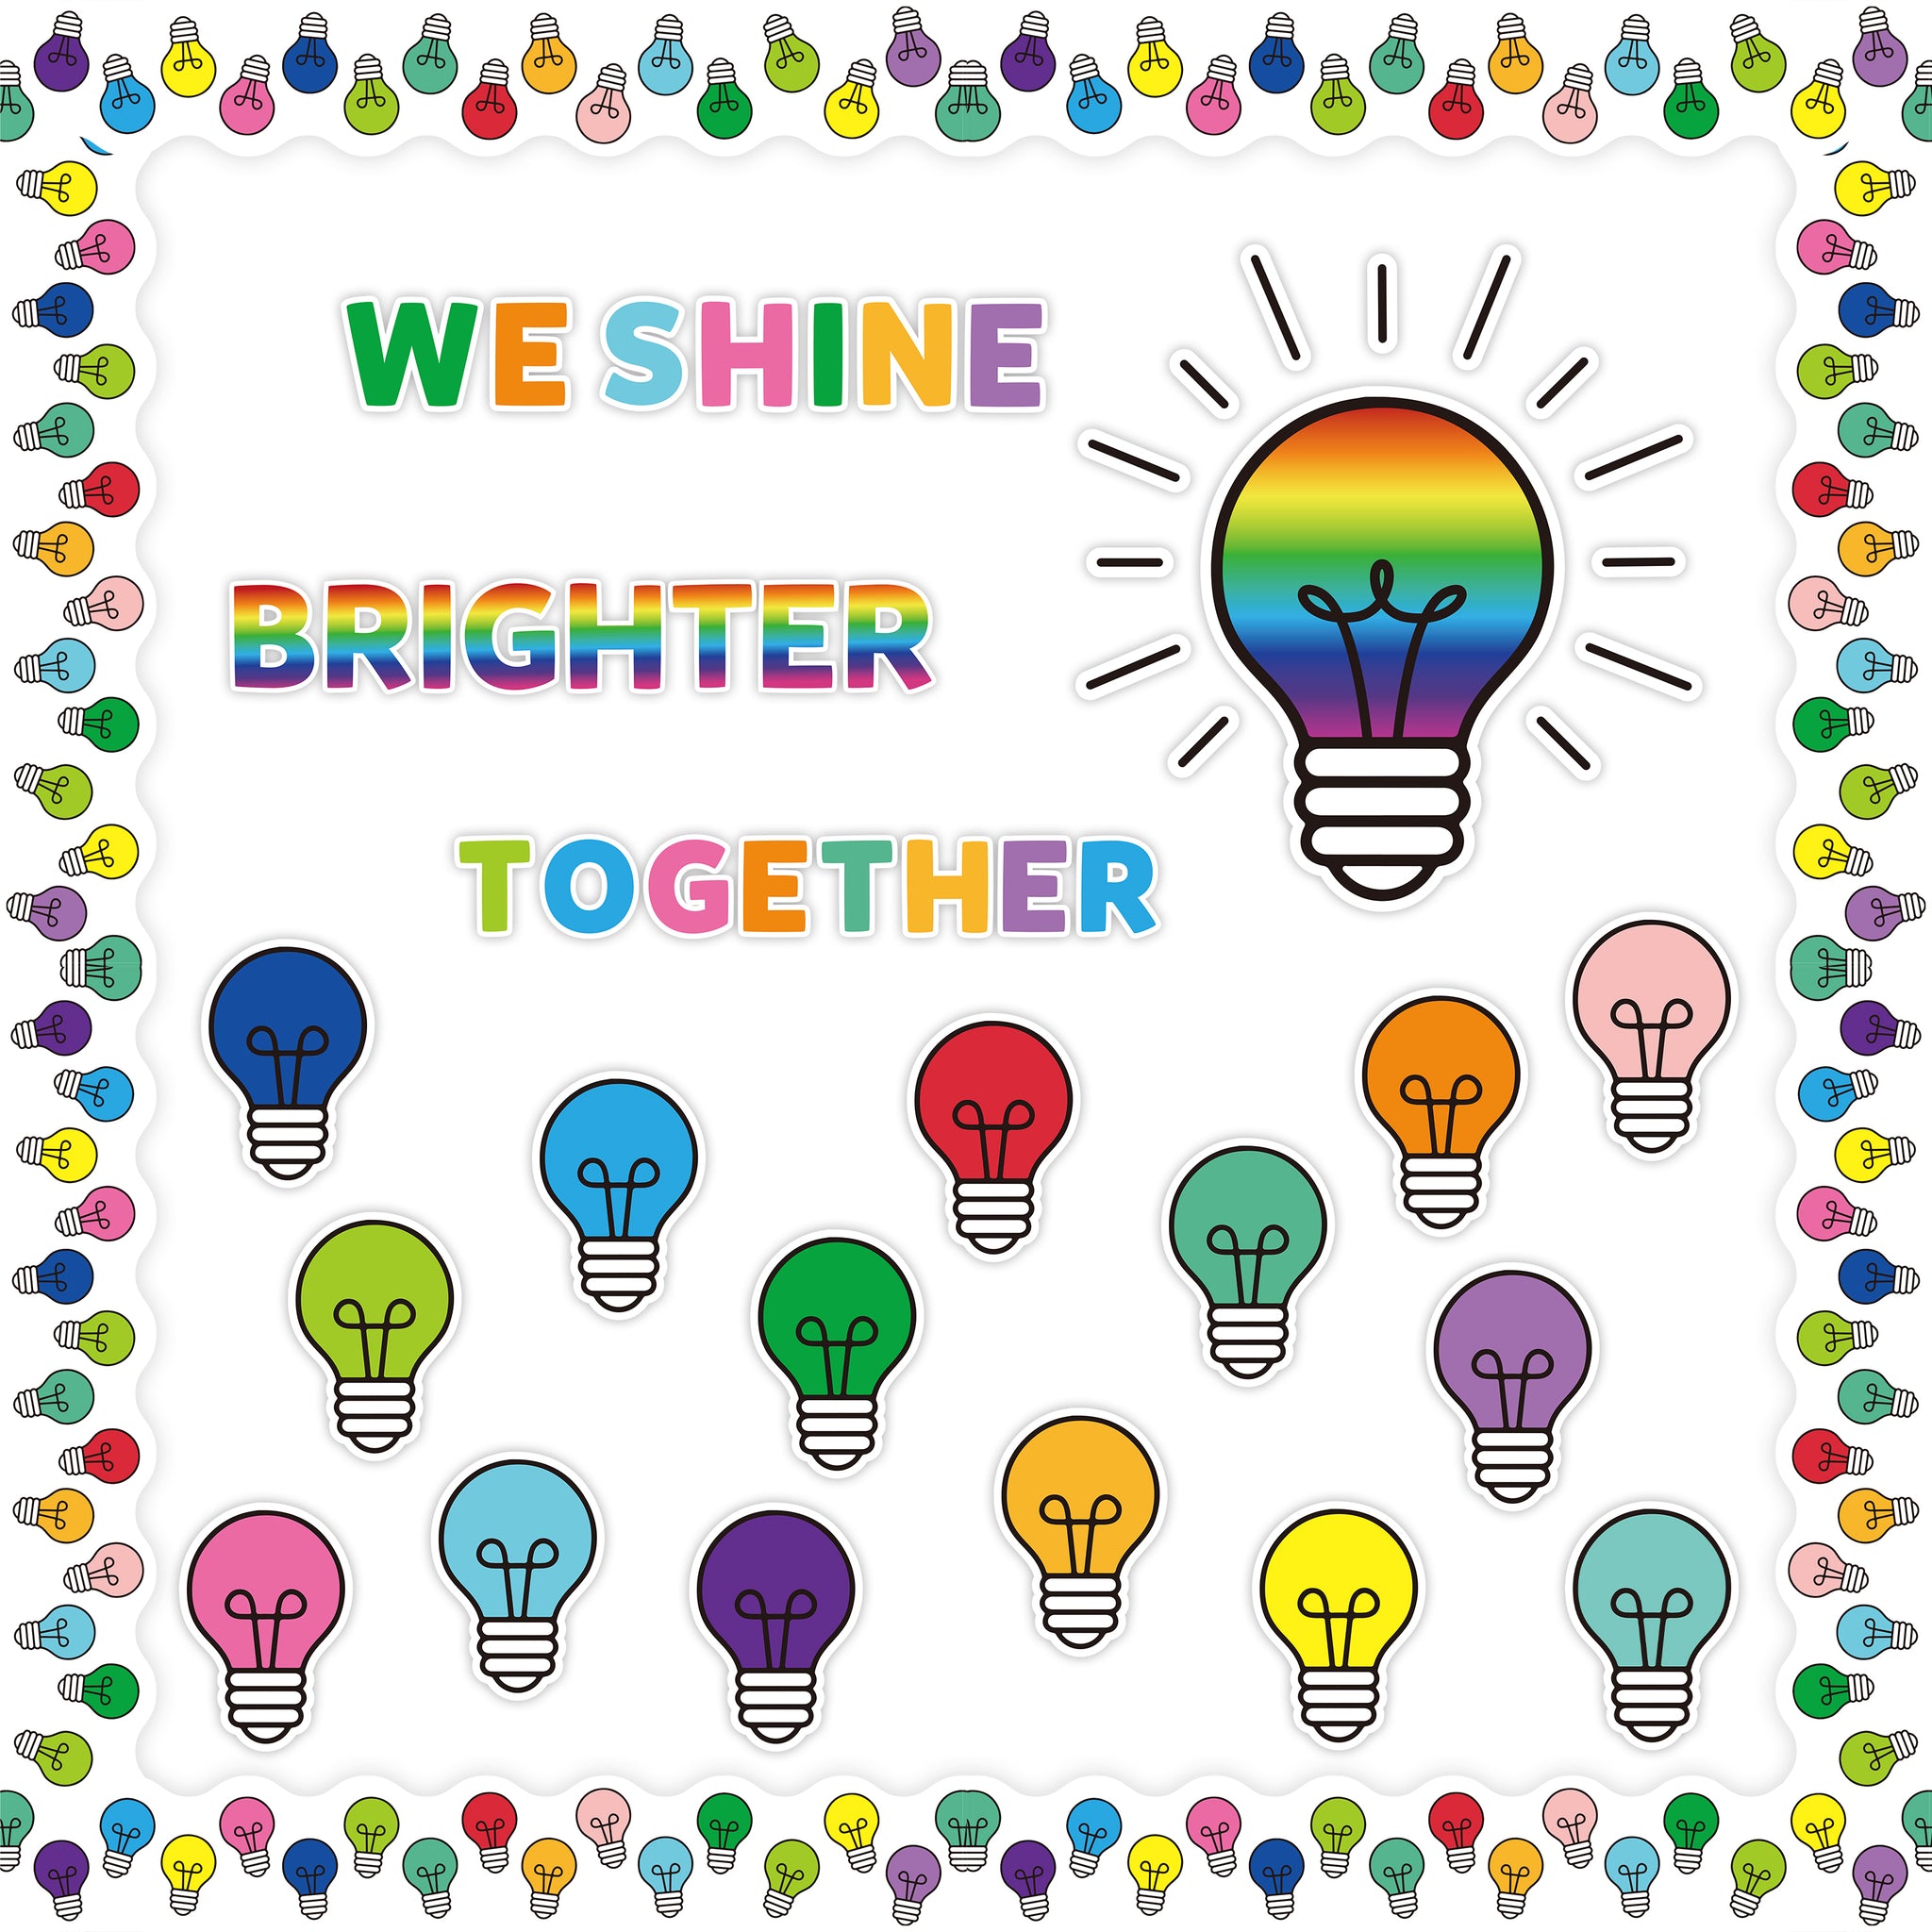 YINGENIVA Light Bulb Bulletin Board Cutouts We Shine Brighter Together